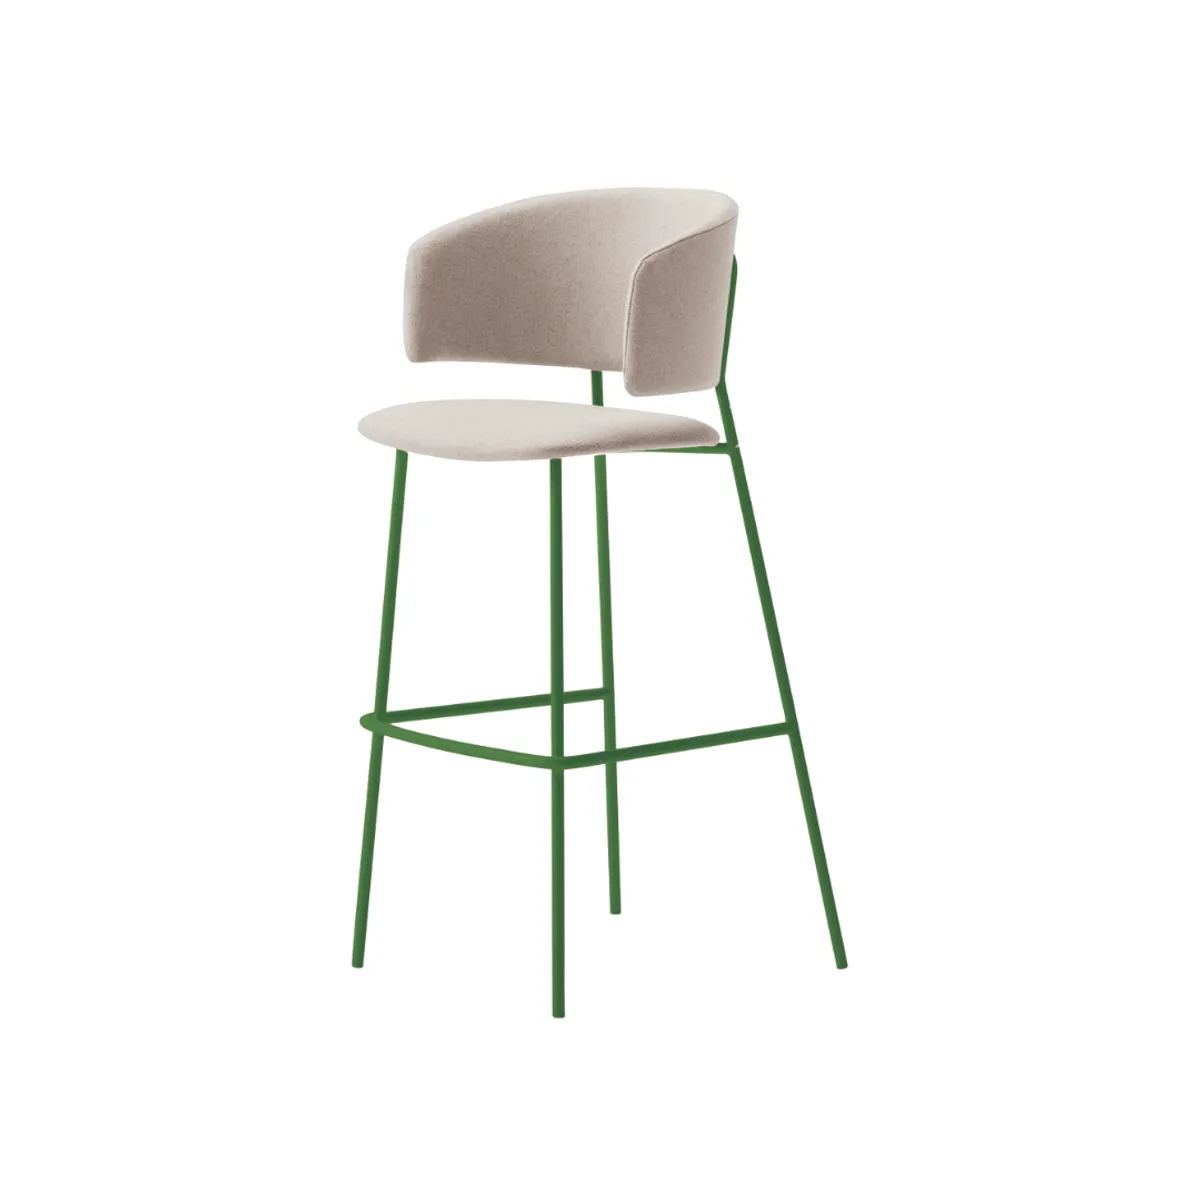 Minty curved bar stool 1